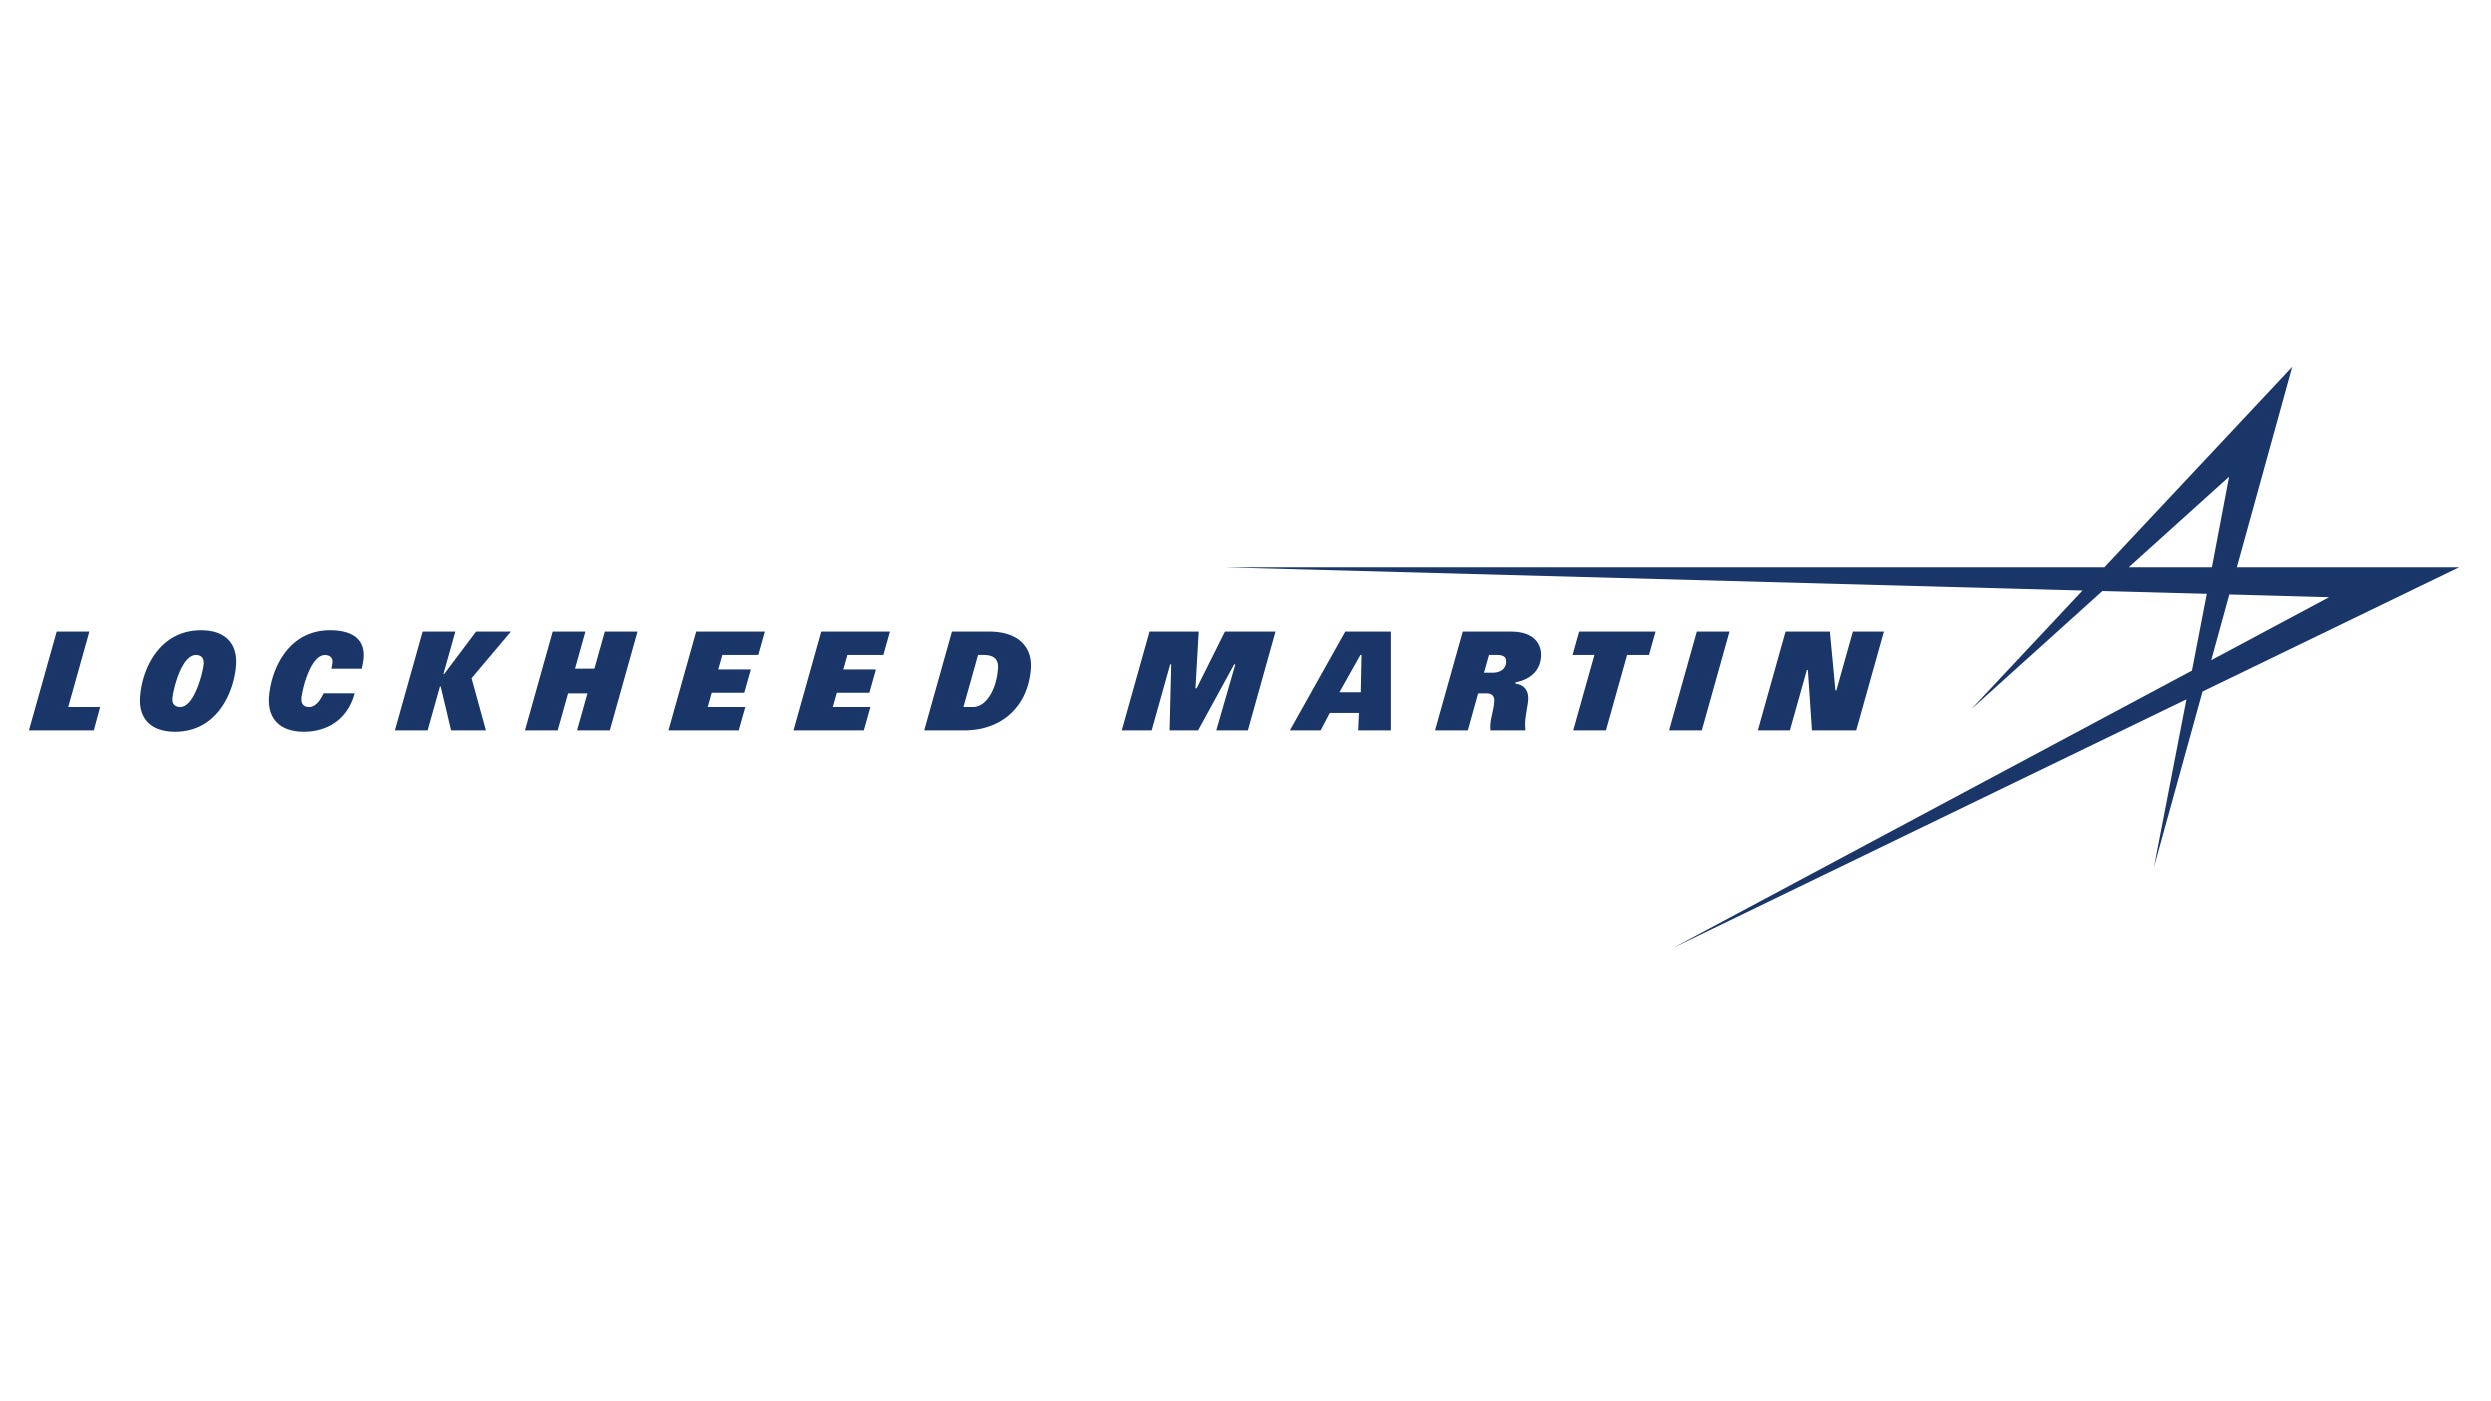 Lockheed Martin awarded missile contract for Australia